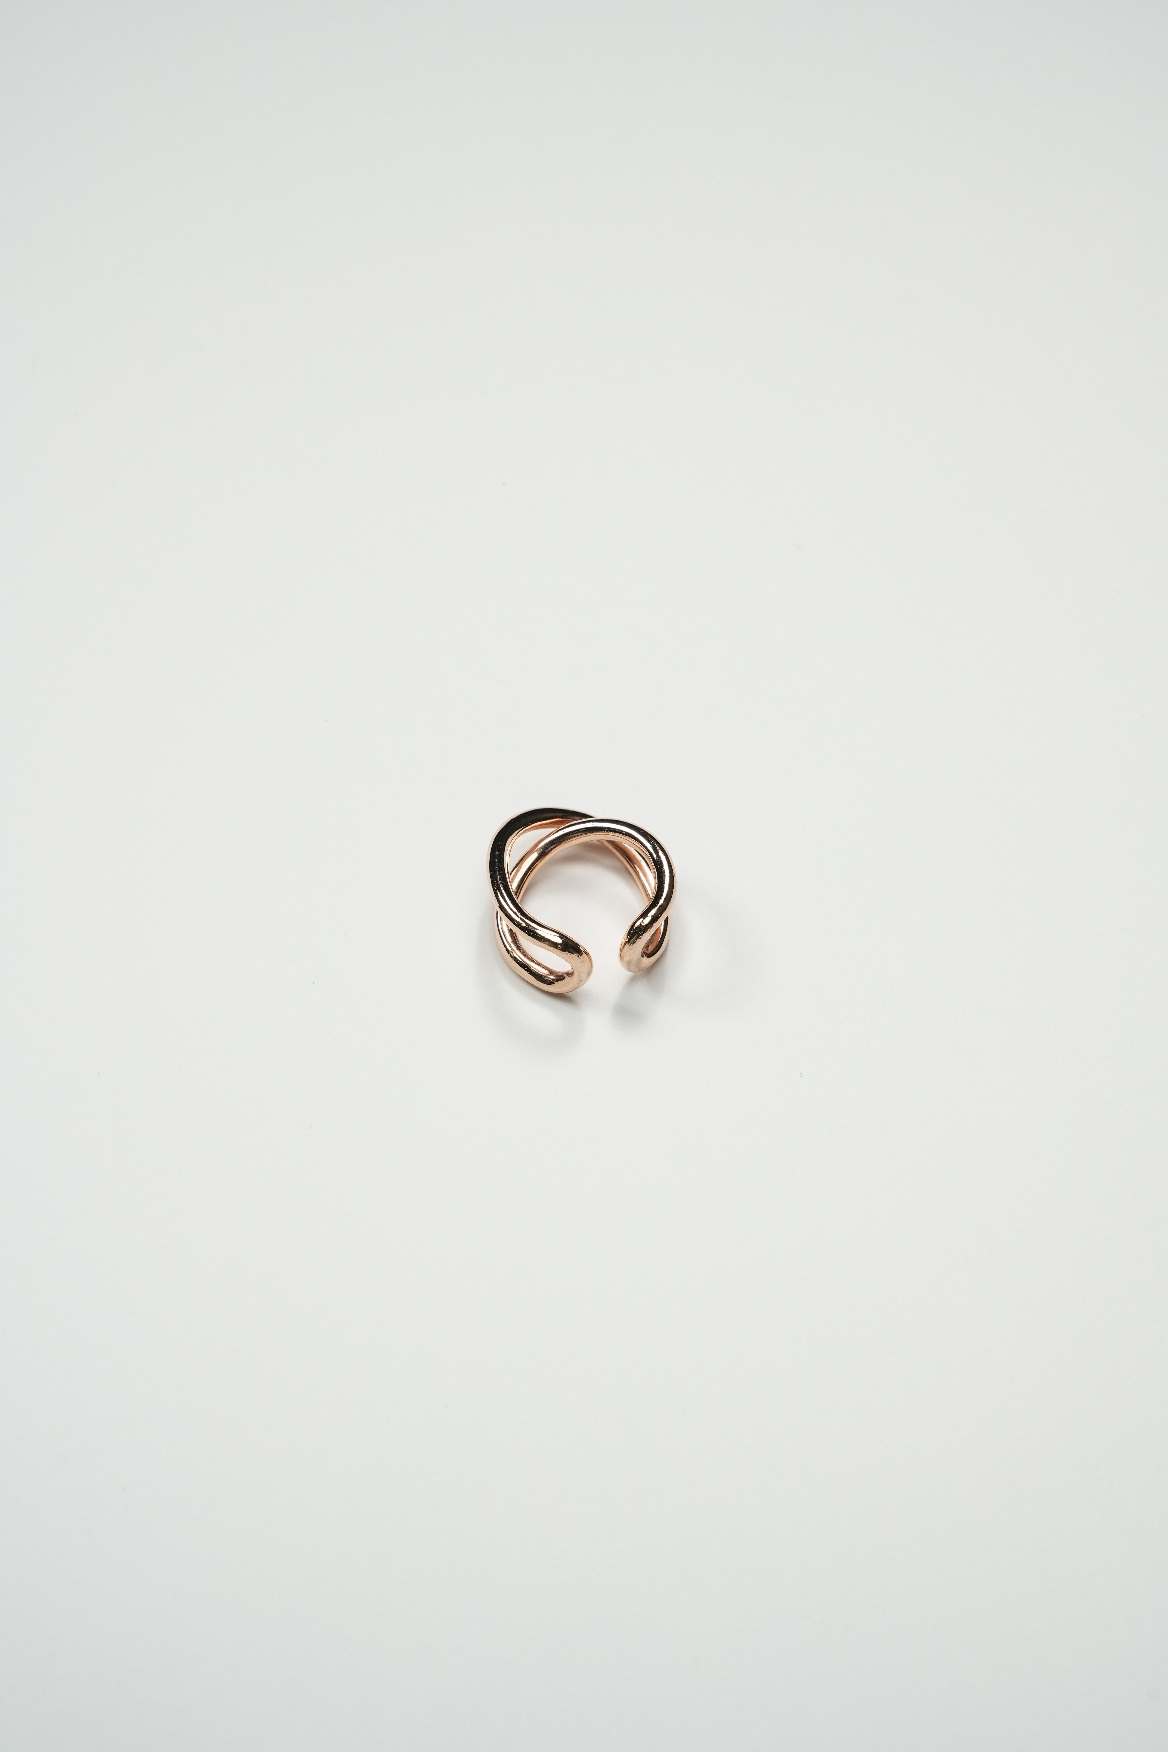 24K rose gold vermeil ring/earcuff in 925 silver-0